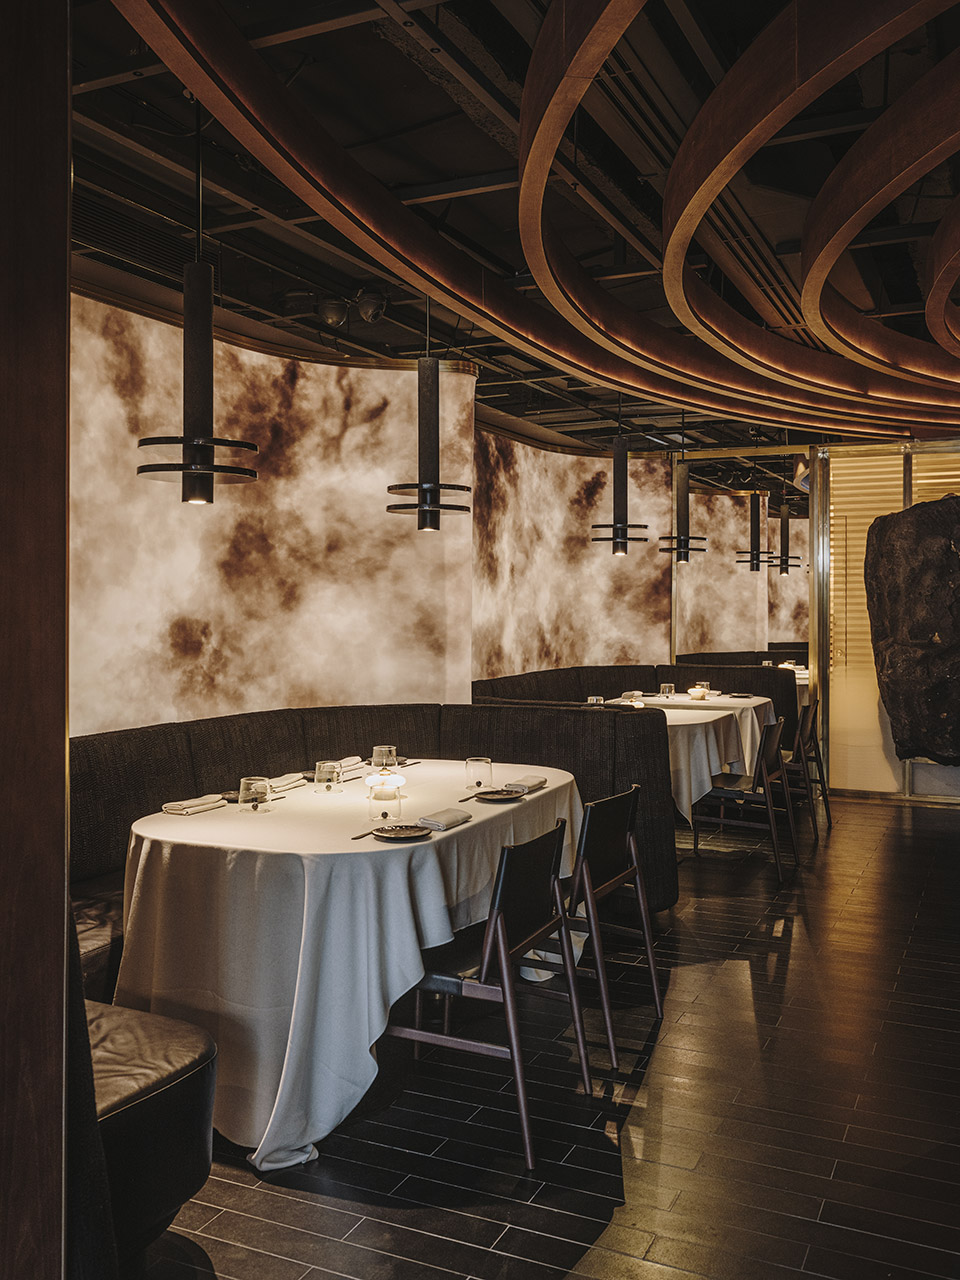 Leña餐厅，西班牙/木头、石头和炭火，提取最原始的烹饪精髓-75